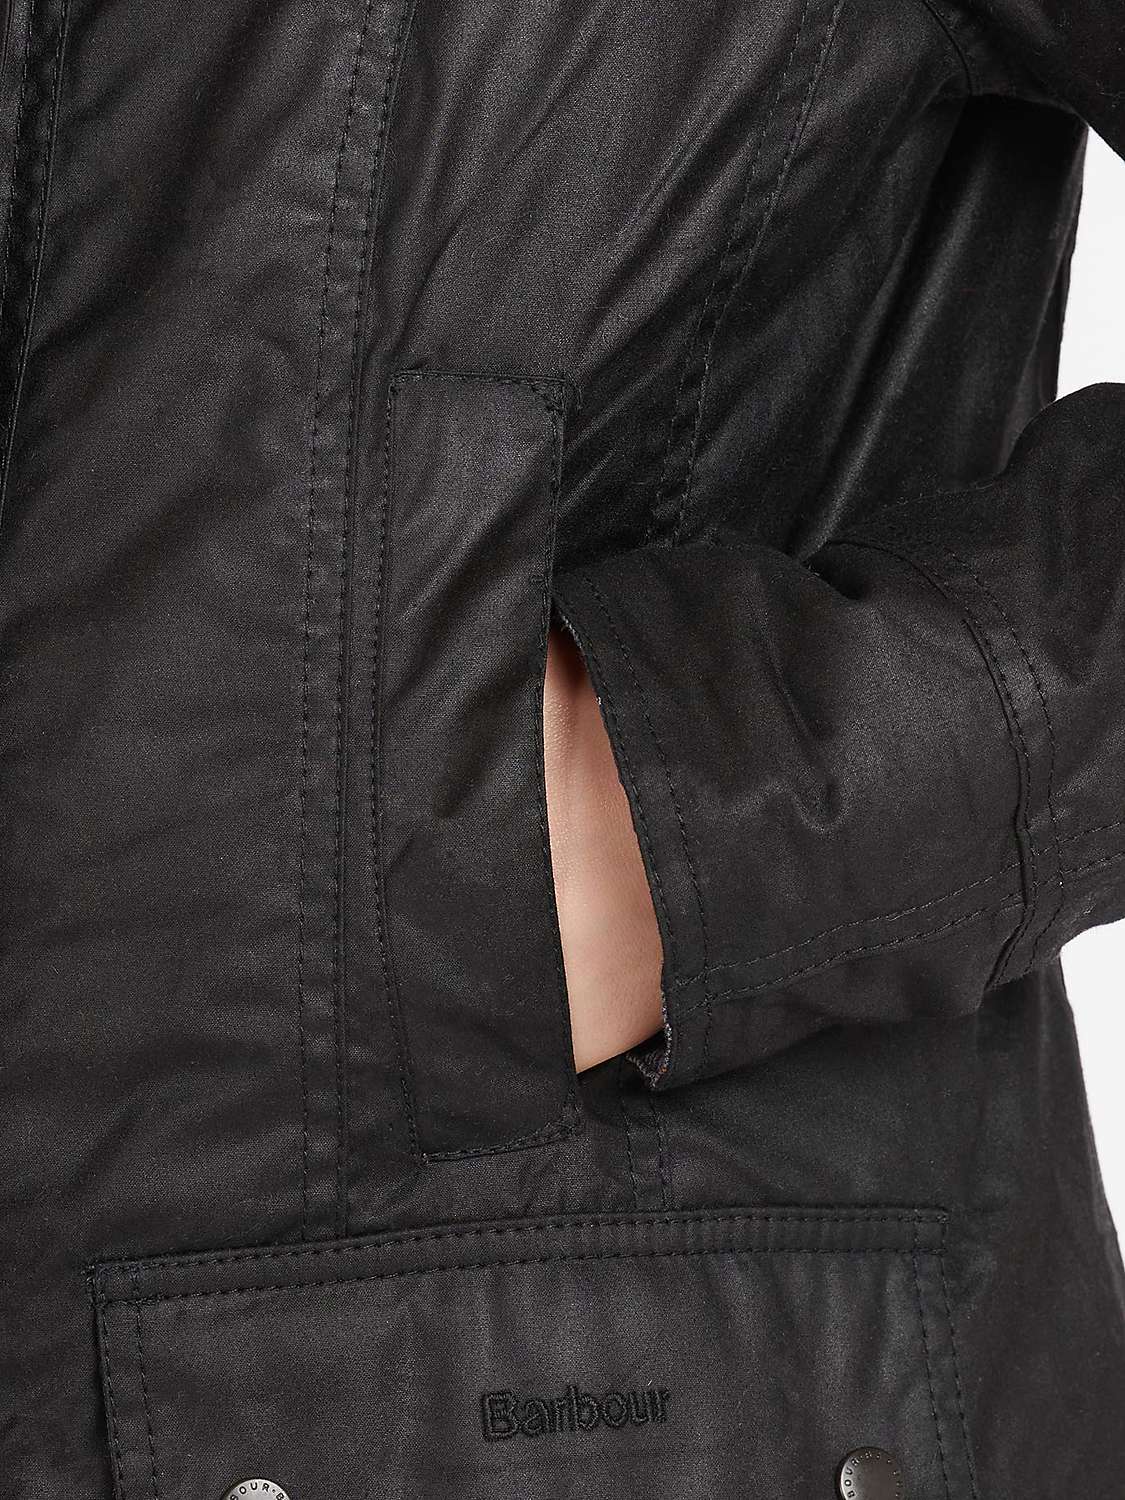 Buy Barbour Bedale Plain Wax Jacket, Black Online at johnlewis.com